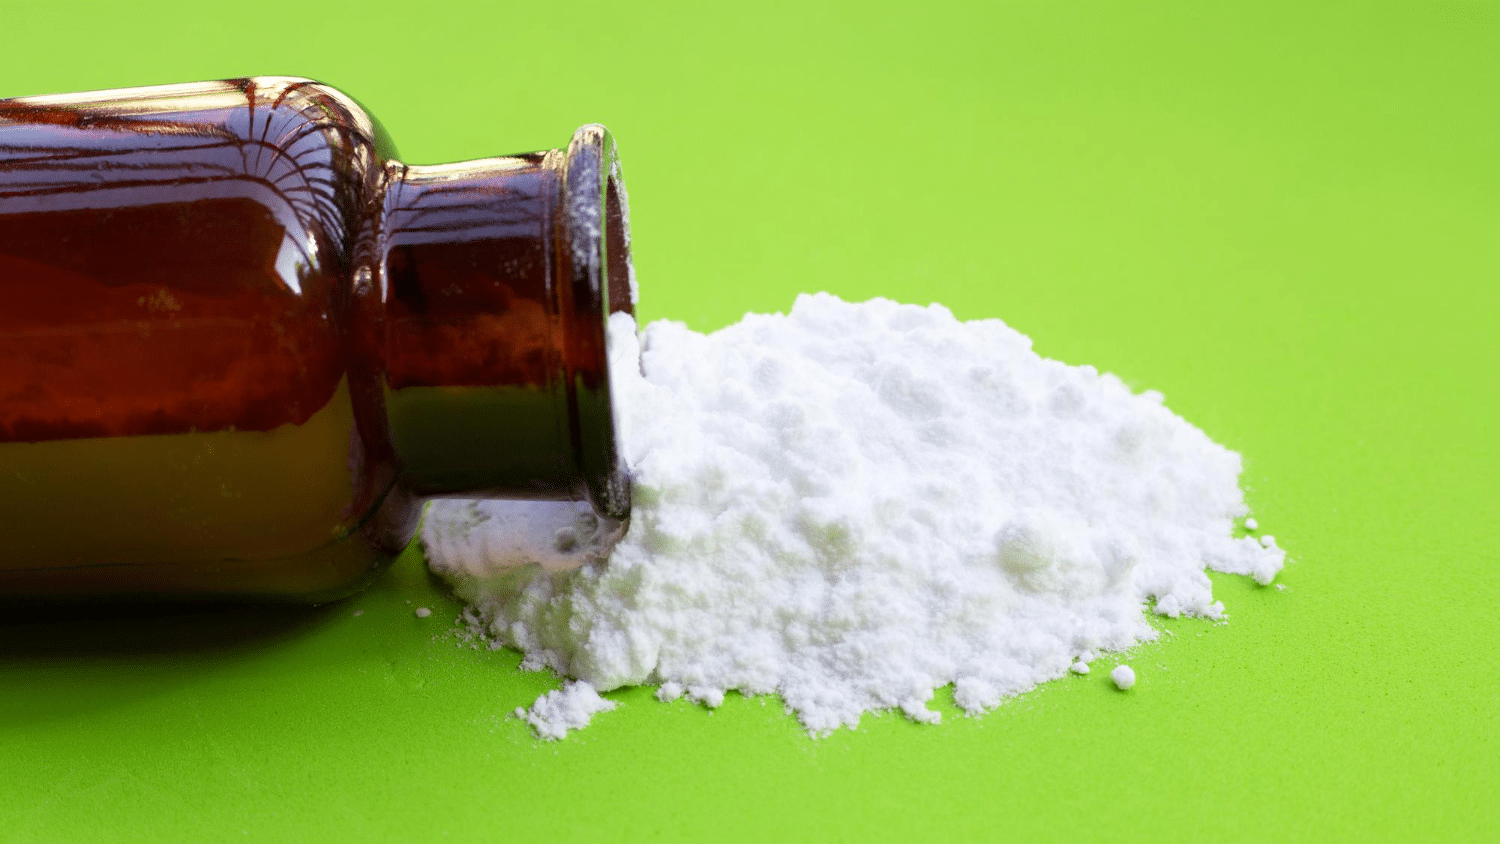 perchlorate salt on green background